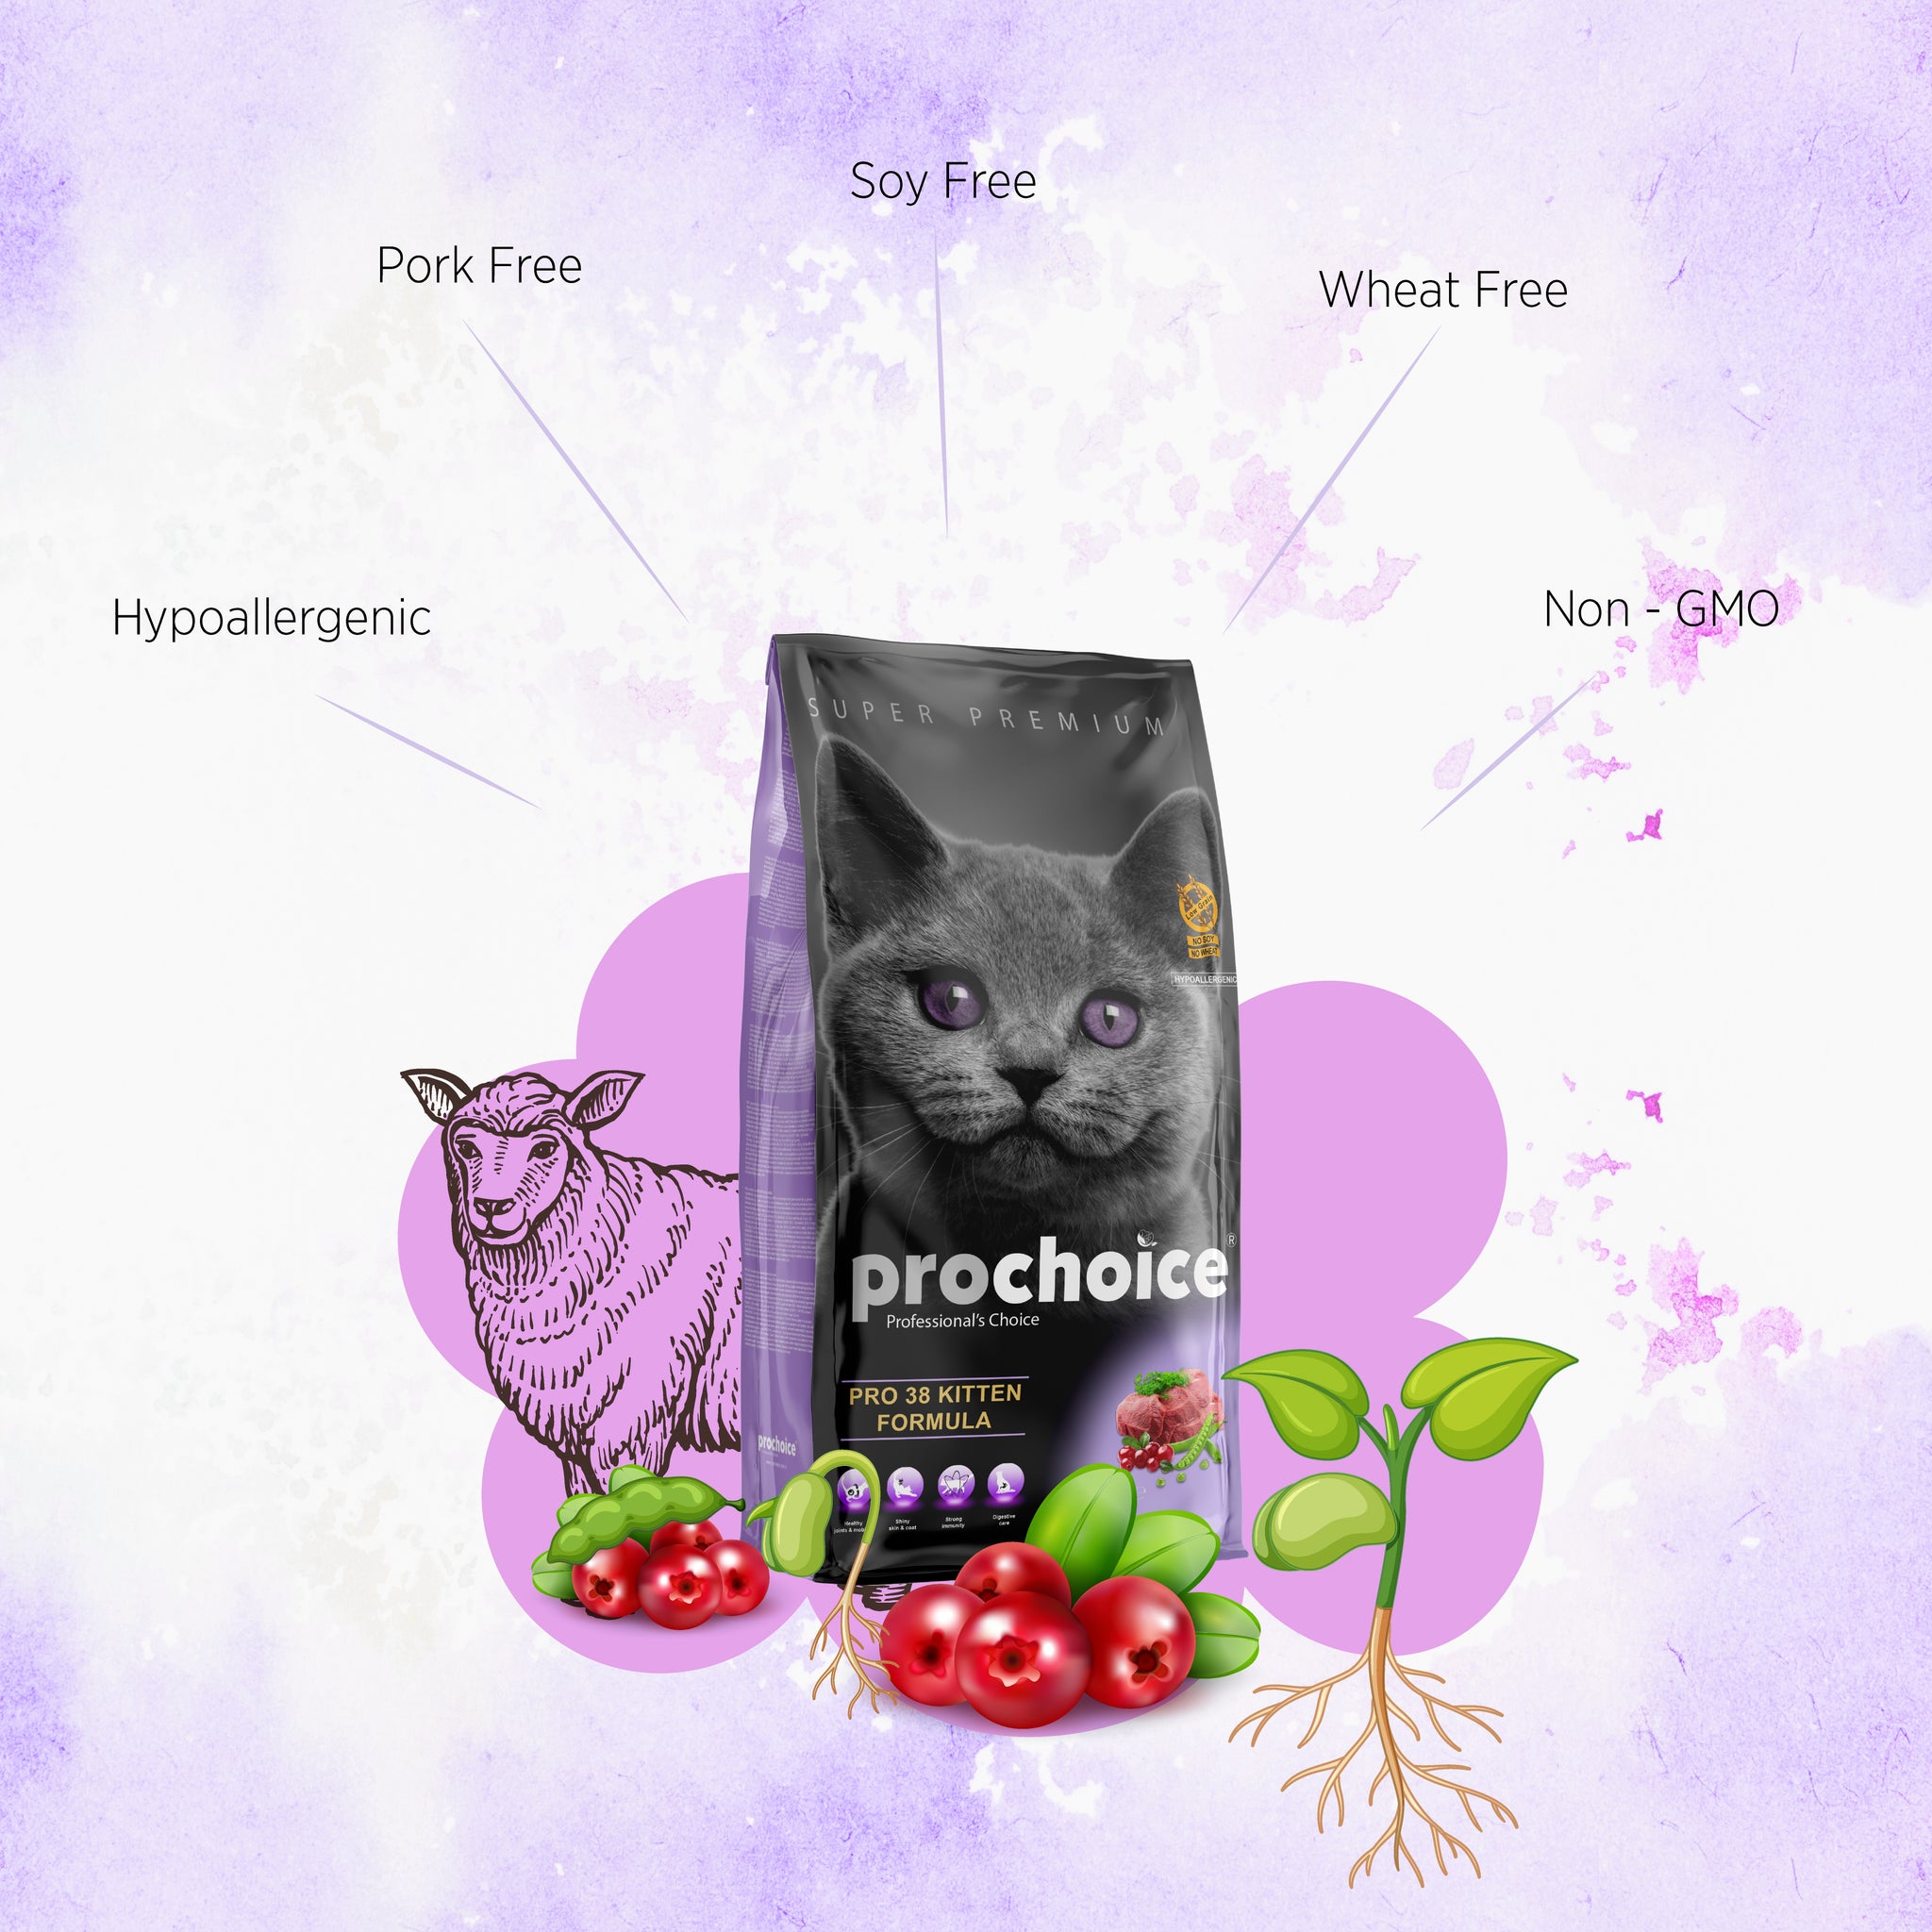 Pro 38 Lamb & Rice Formula - Dry Food For Kittens